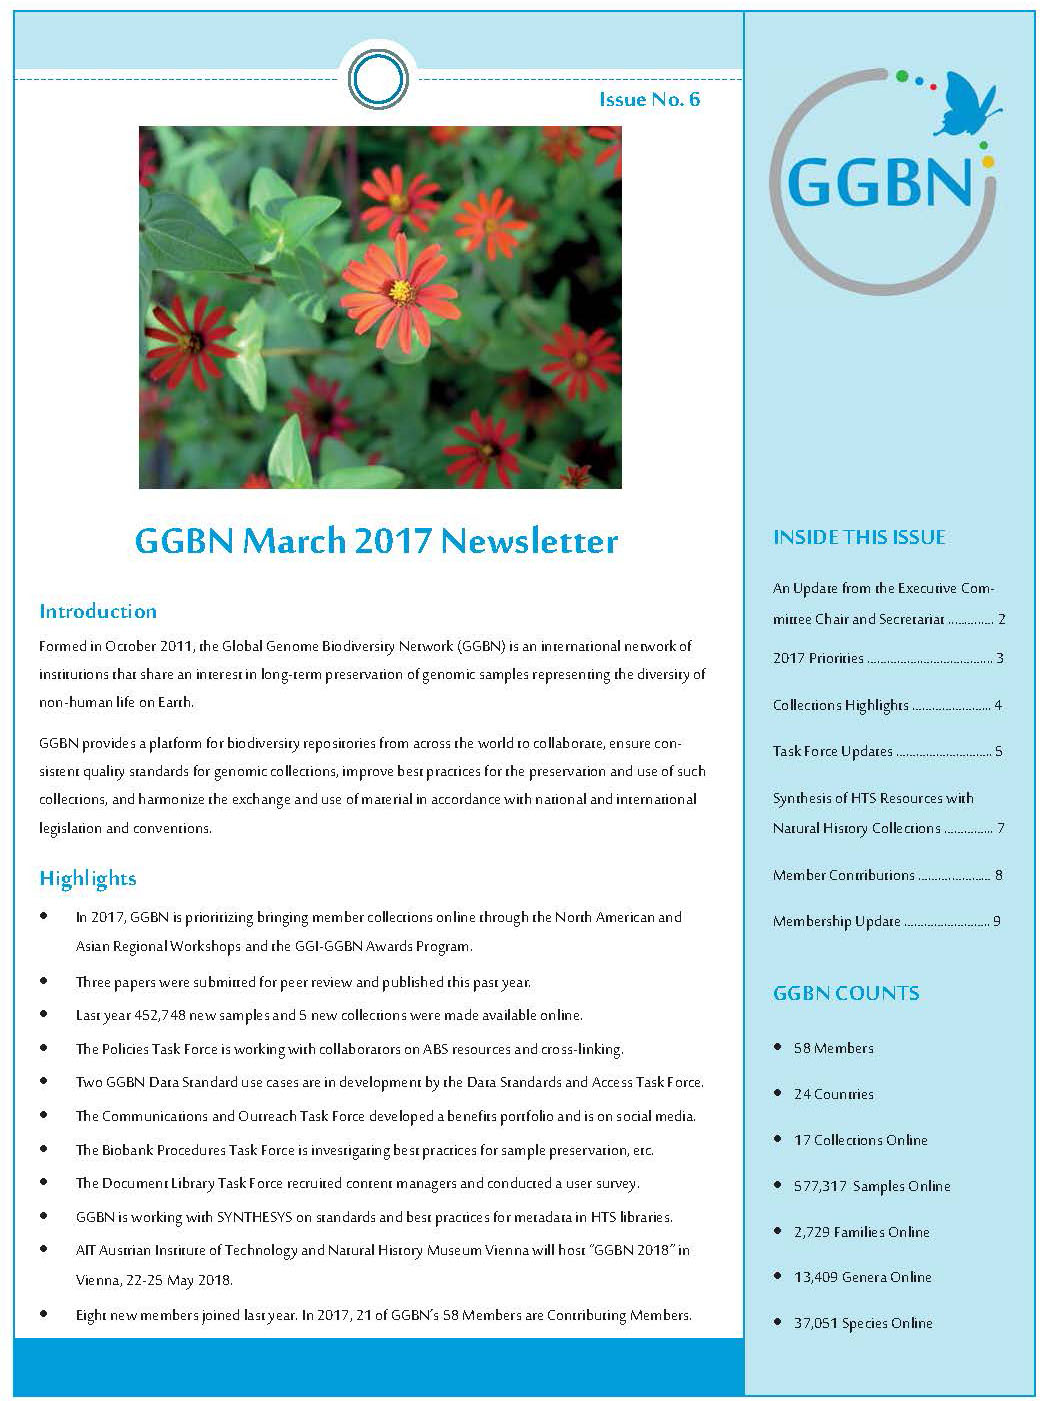 GGBN2017Newsletter.jpg